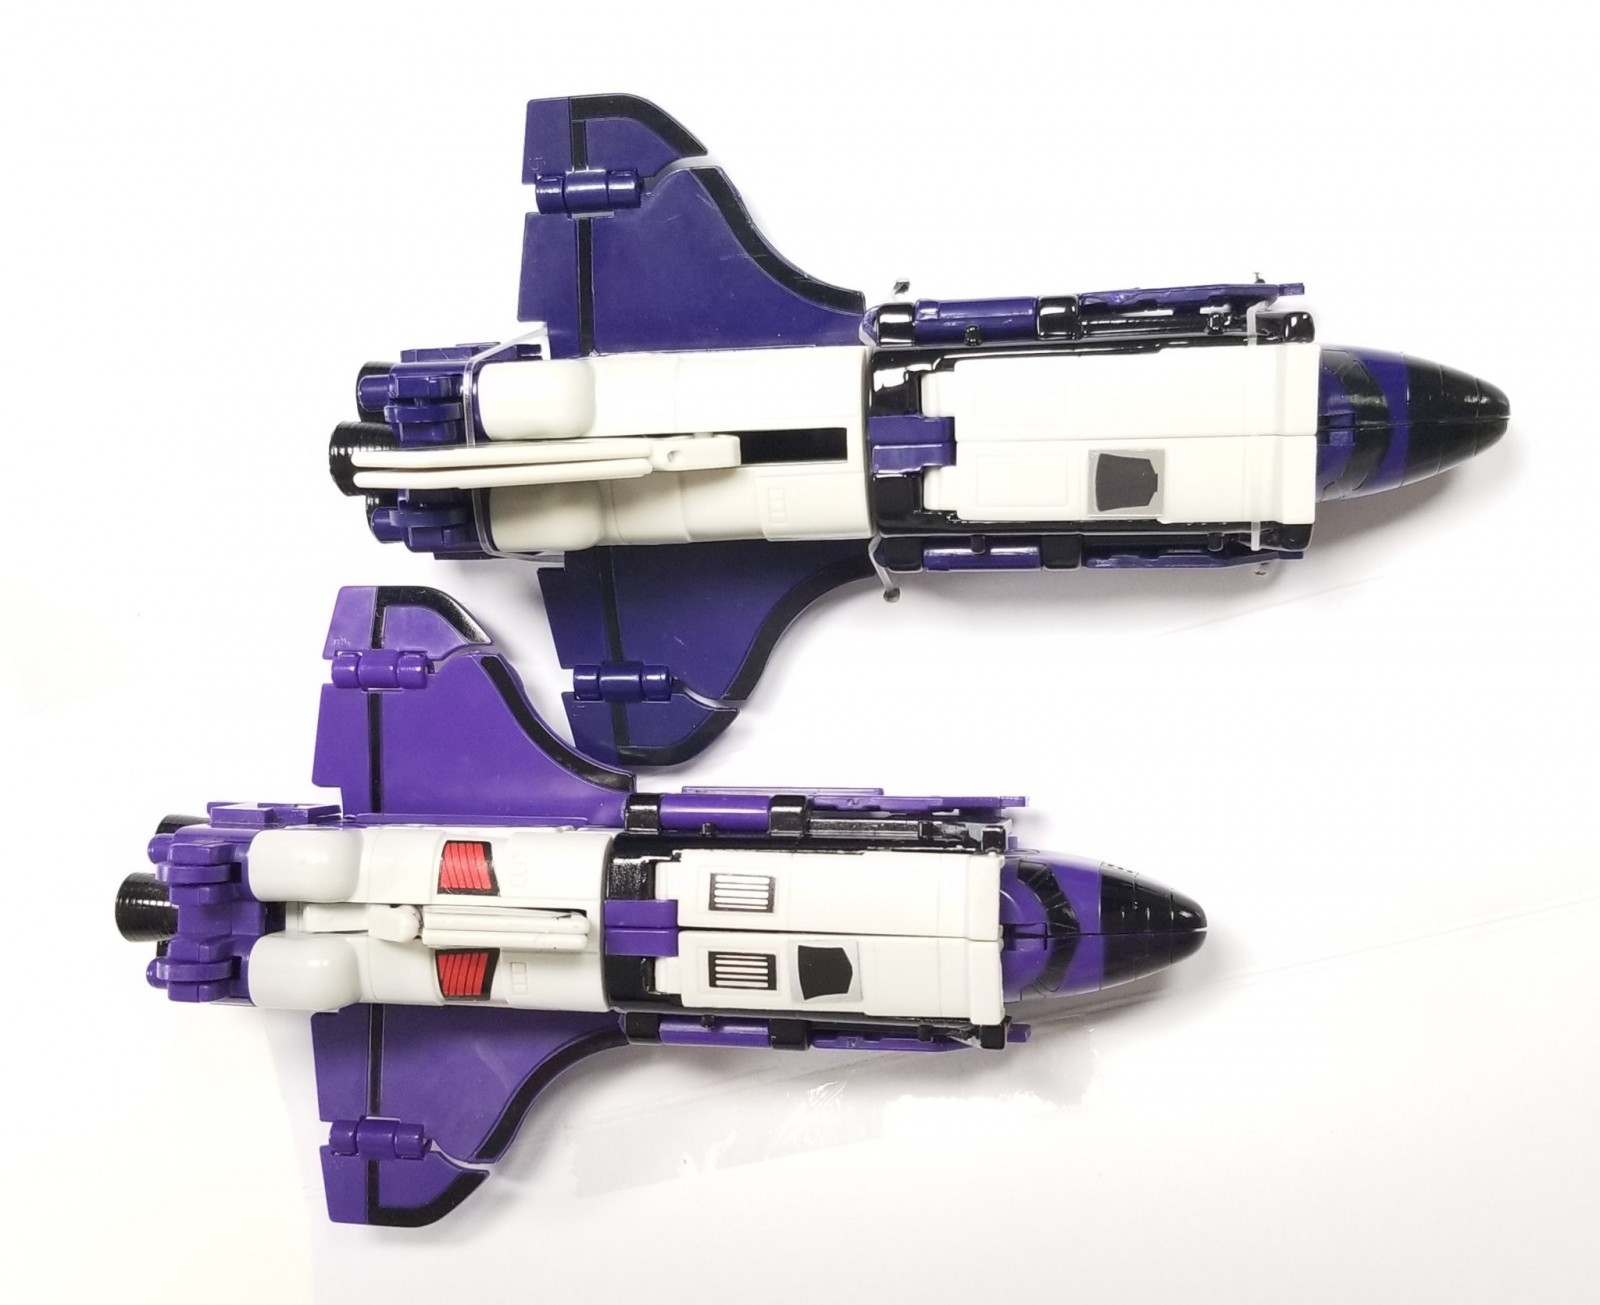 transformers astrotrain toy